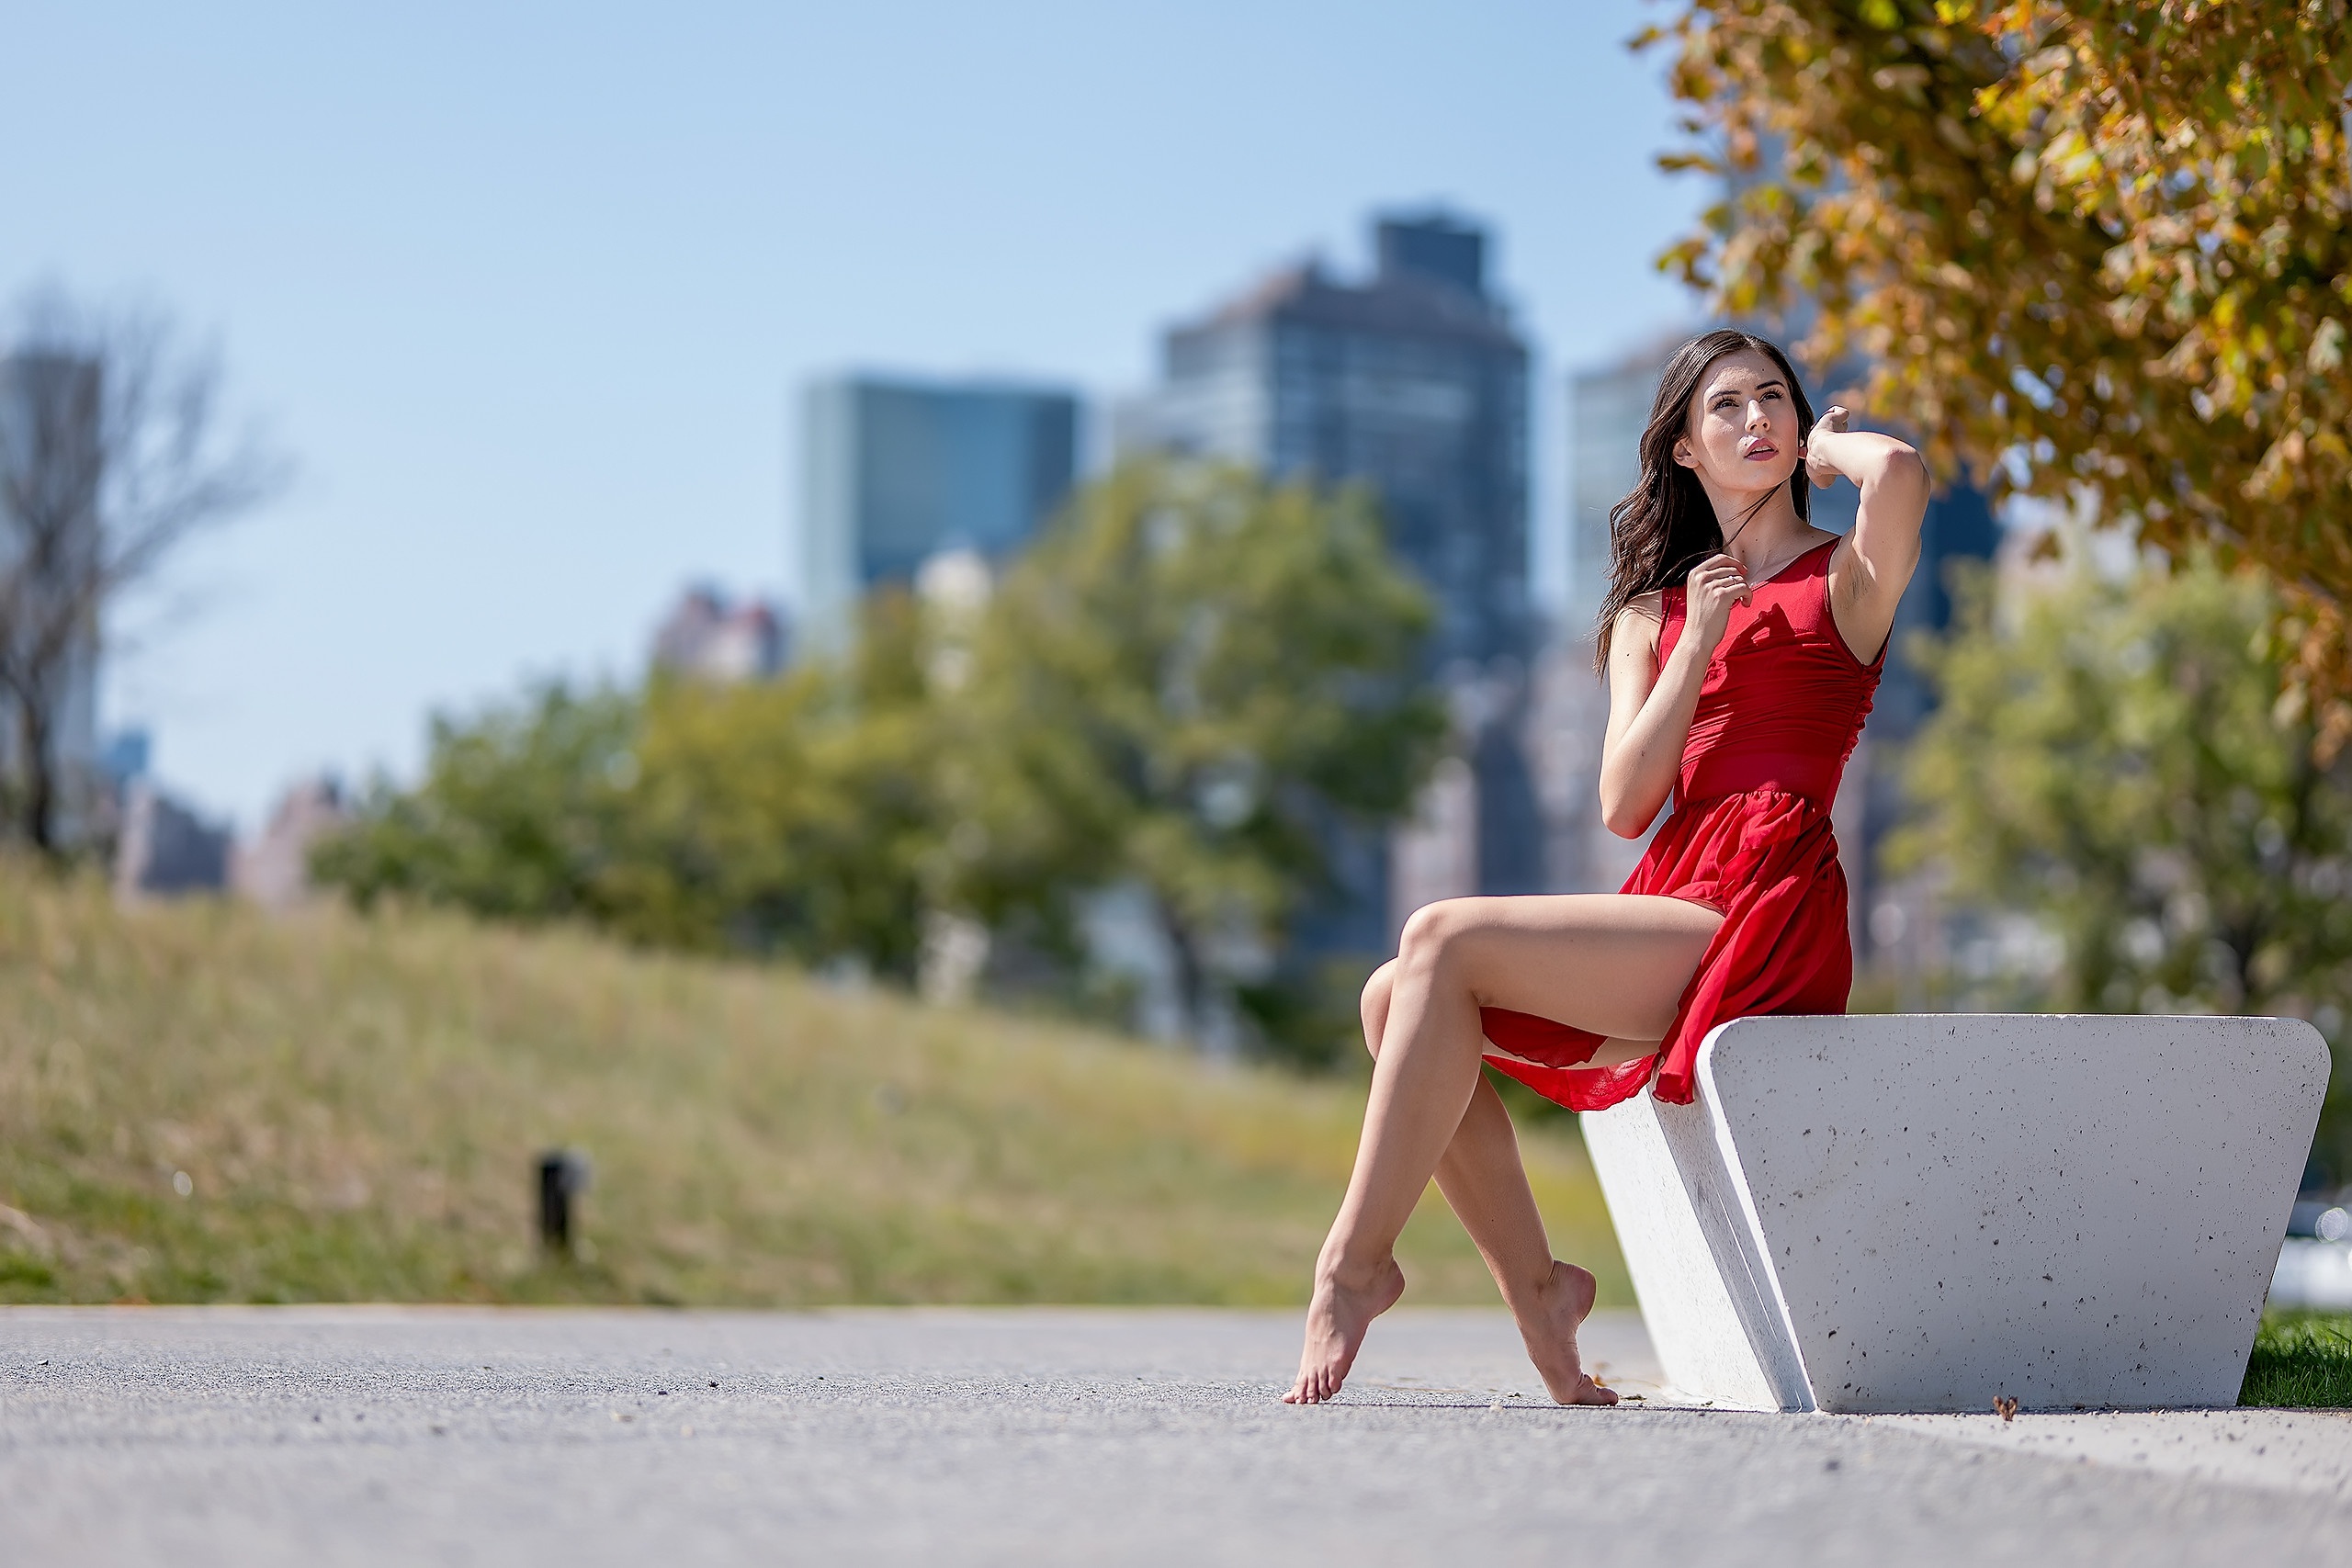 Urban Women Outdoors Sitting Bench Legs Tiptoe Dress Red Dress Arms Up Looking Up Women Model Brunet 2560x1707